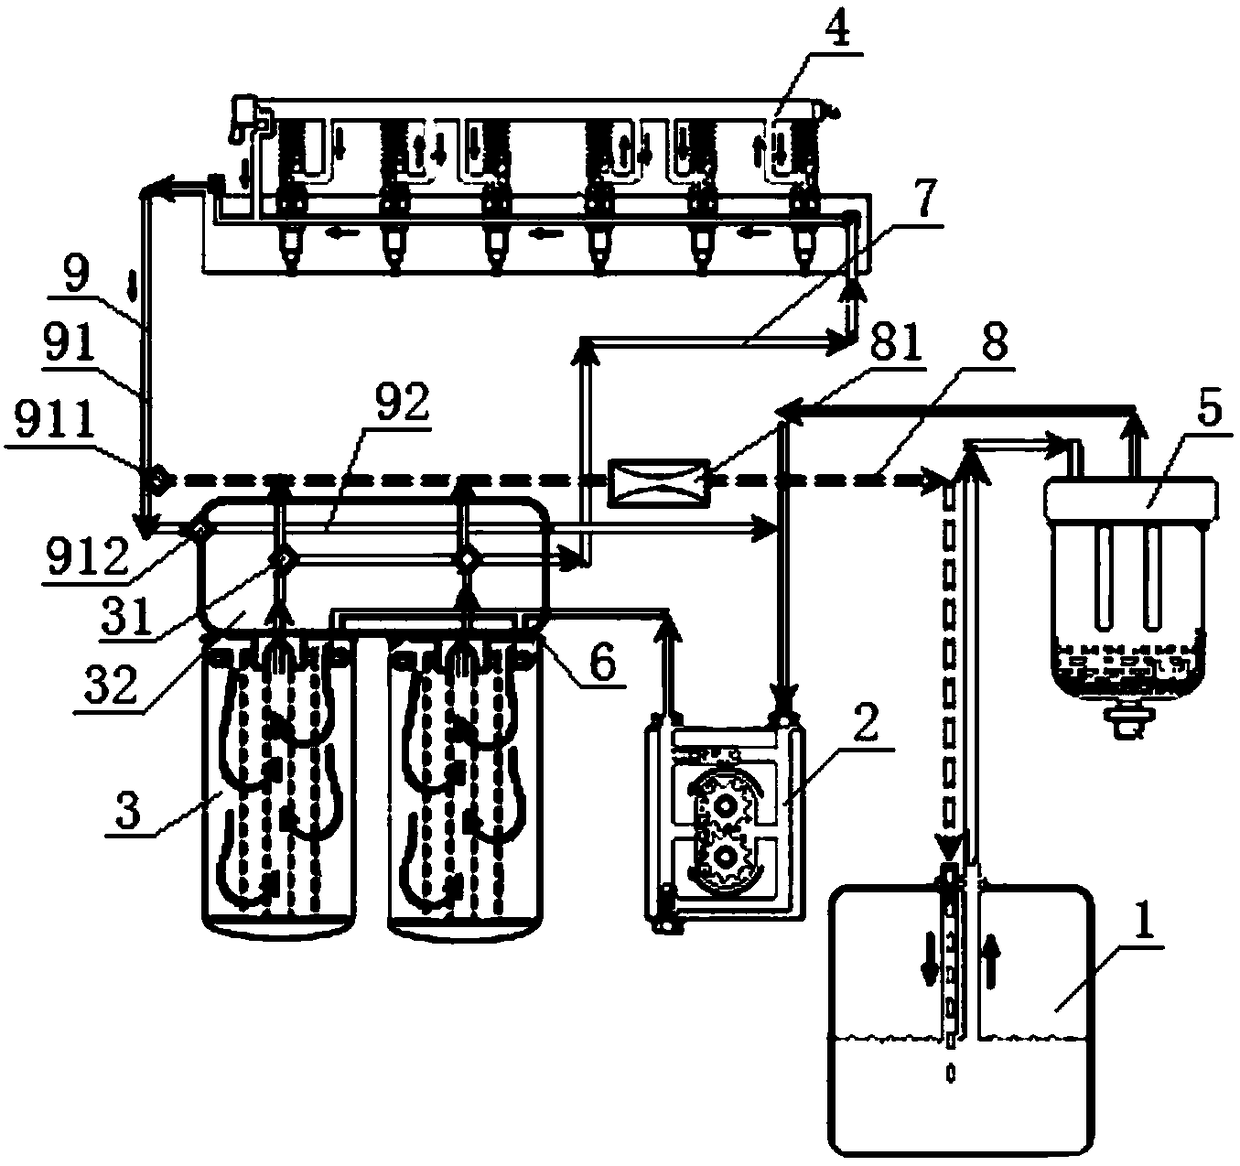 Fuel system of heavy-duty diesel engine